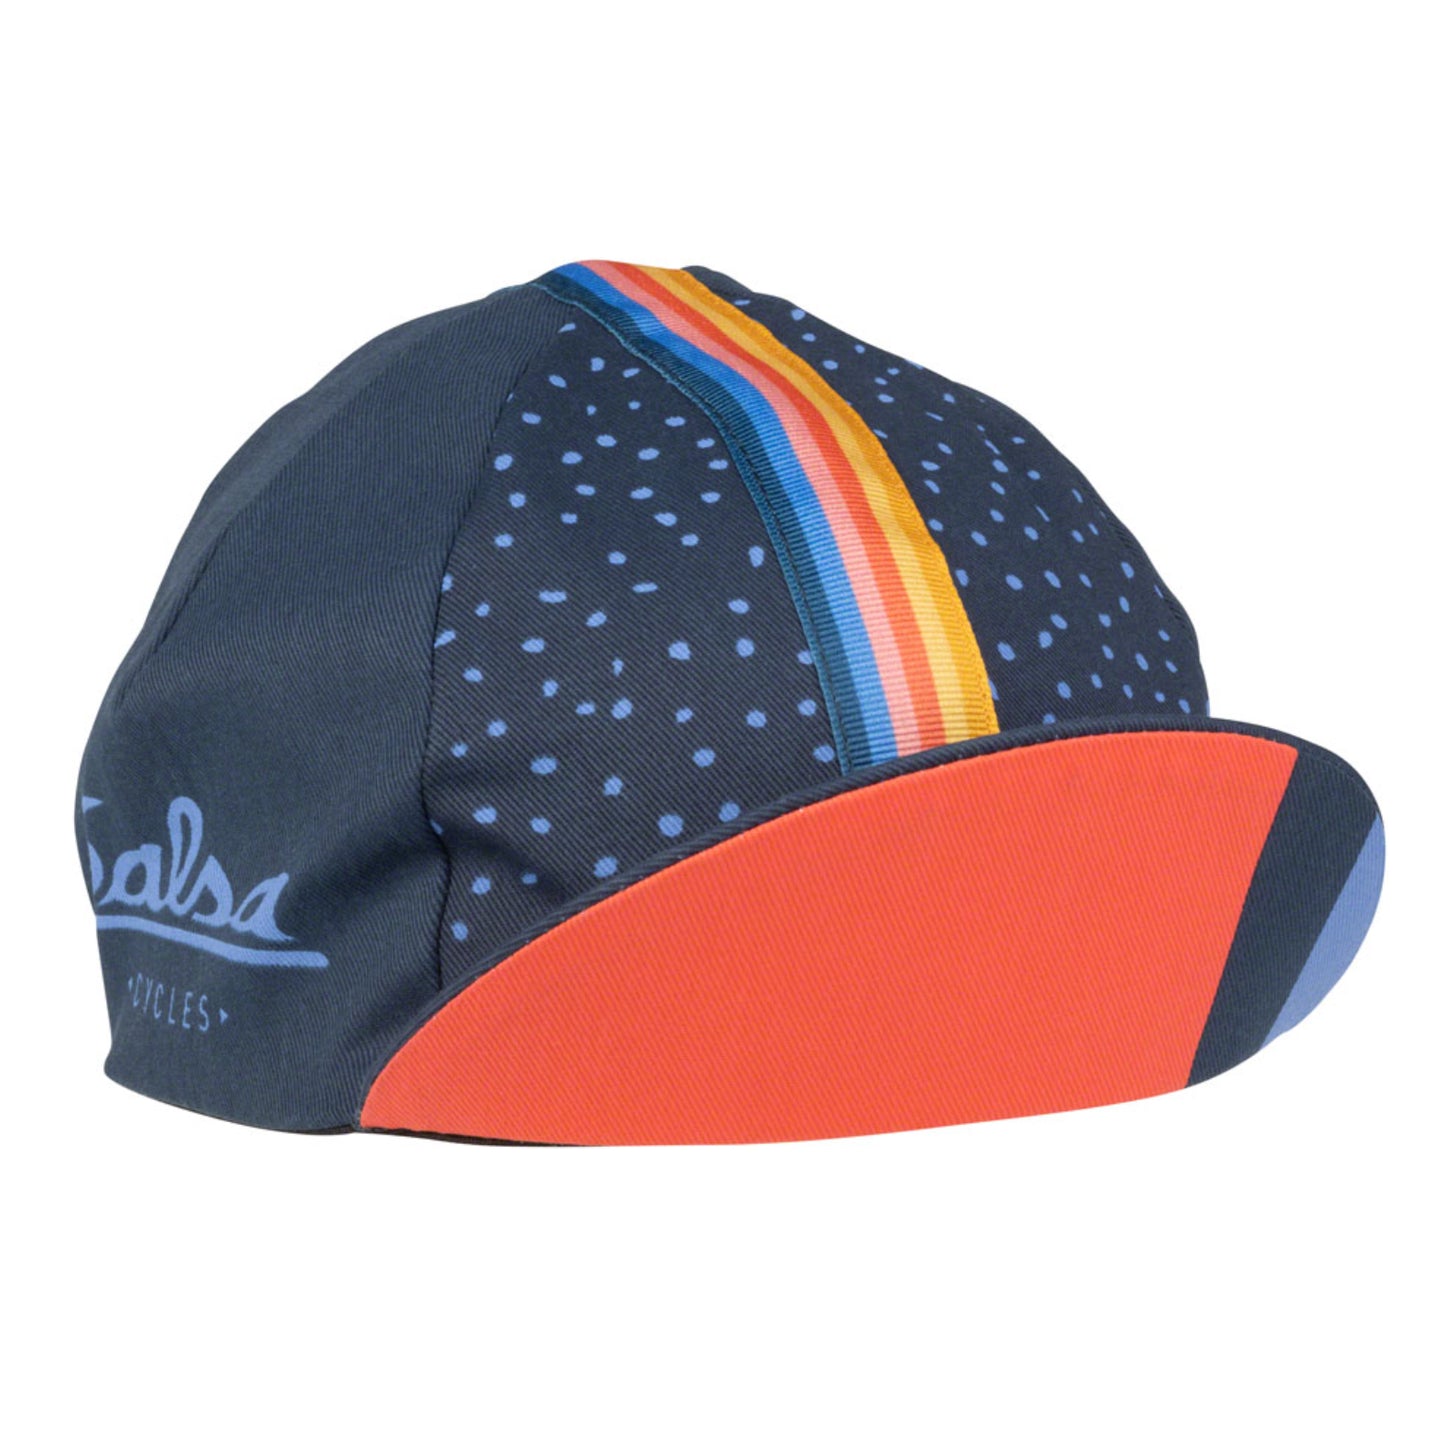 Salsa Team Polytone Cycling Cap - Goldenrod, Dark Blue, w/ Stripes, One Size